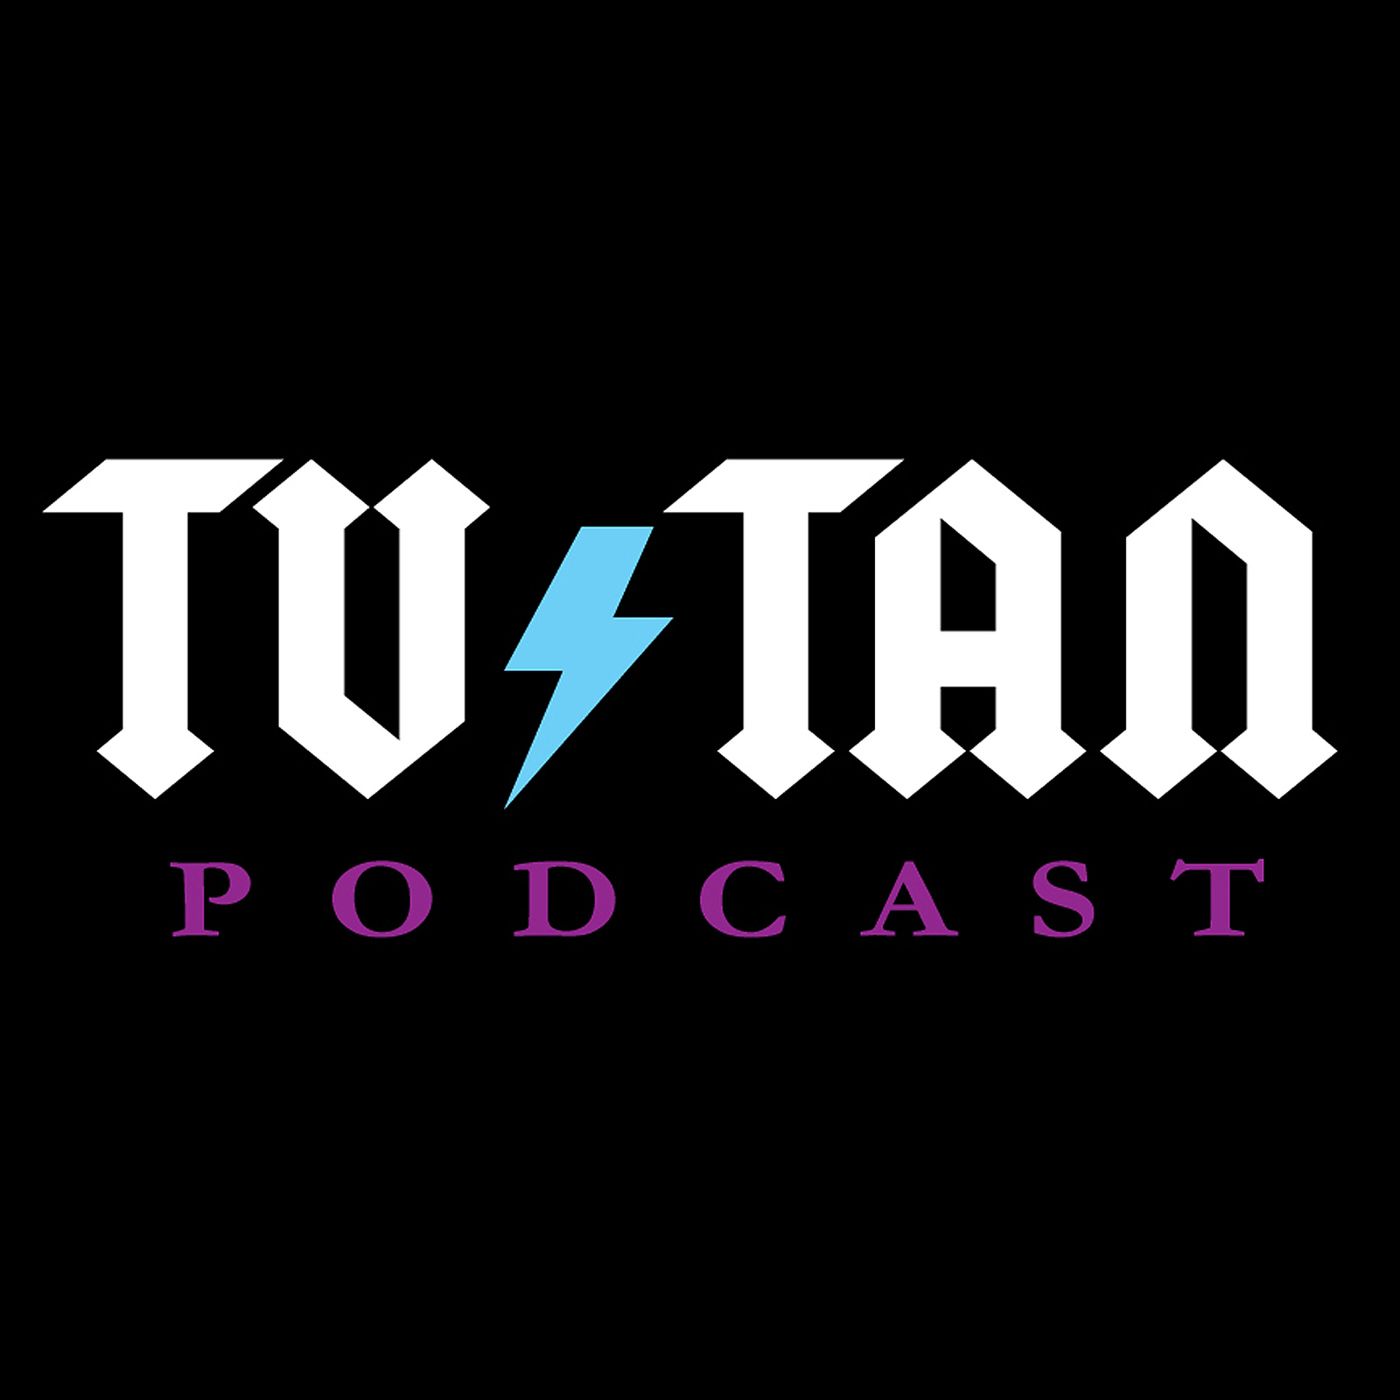 TV Tan Podcast